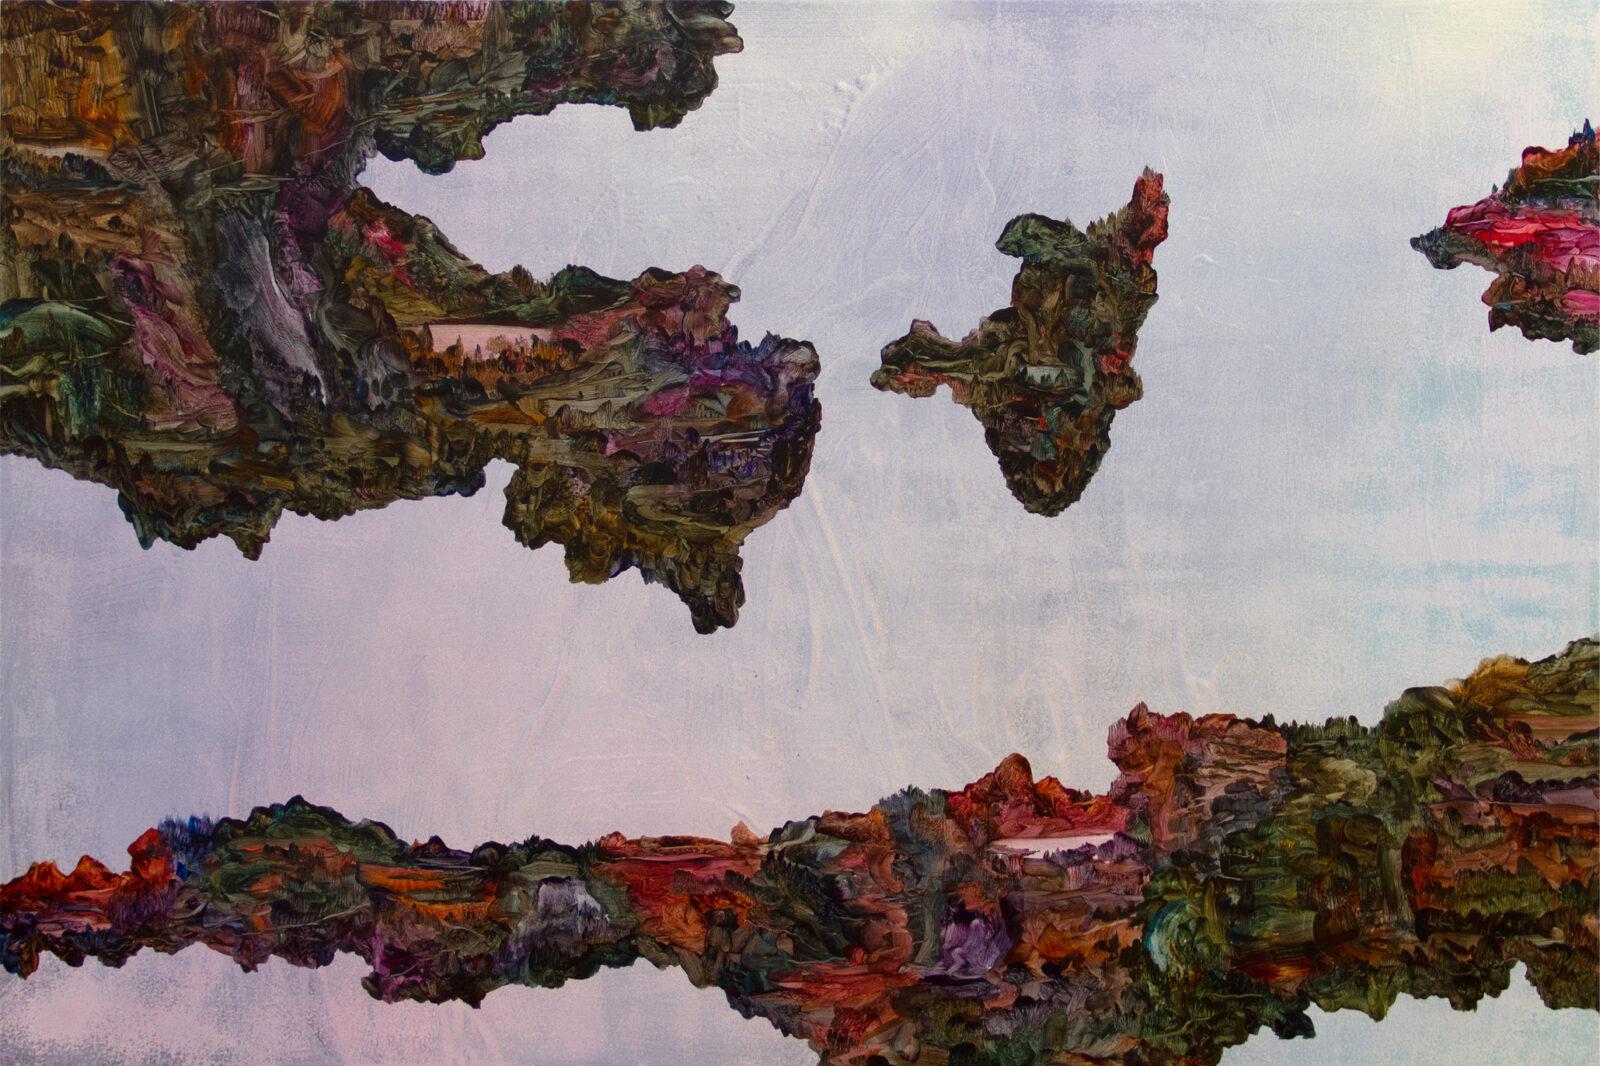 Stefan Peters, Floating Islands, Acryl op houten paneel, 2019, 120 x 80cm